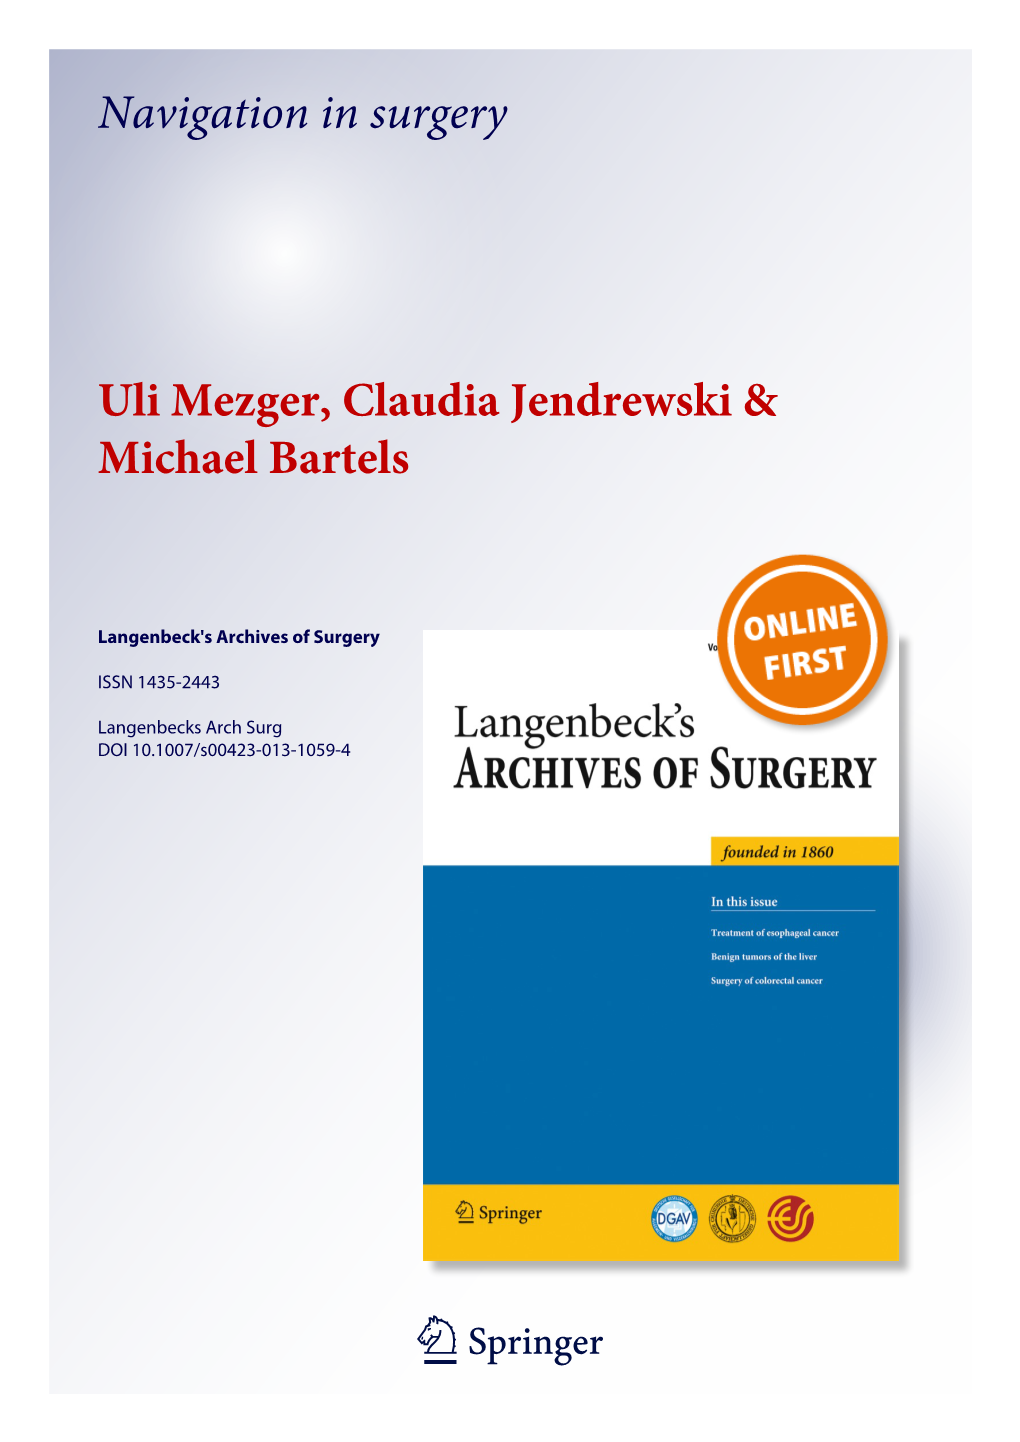 Navigation in Surgery Uli Mezger, Claudia Jendrewski & Michael Bartels